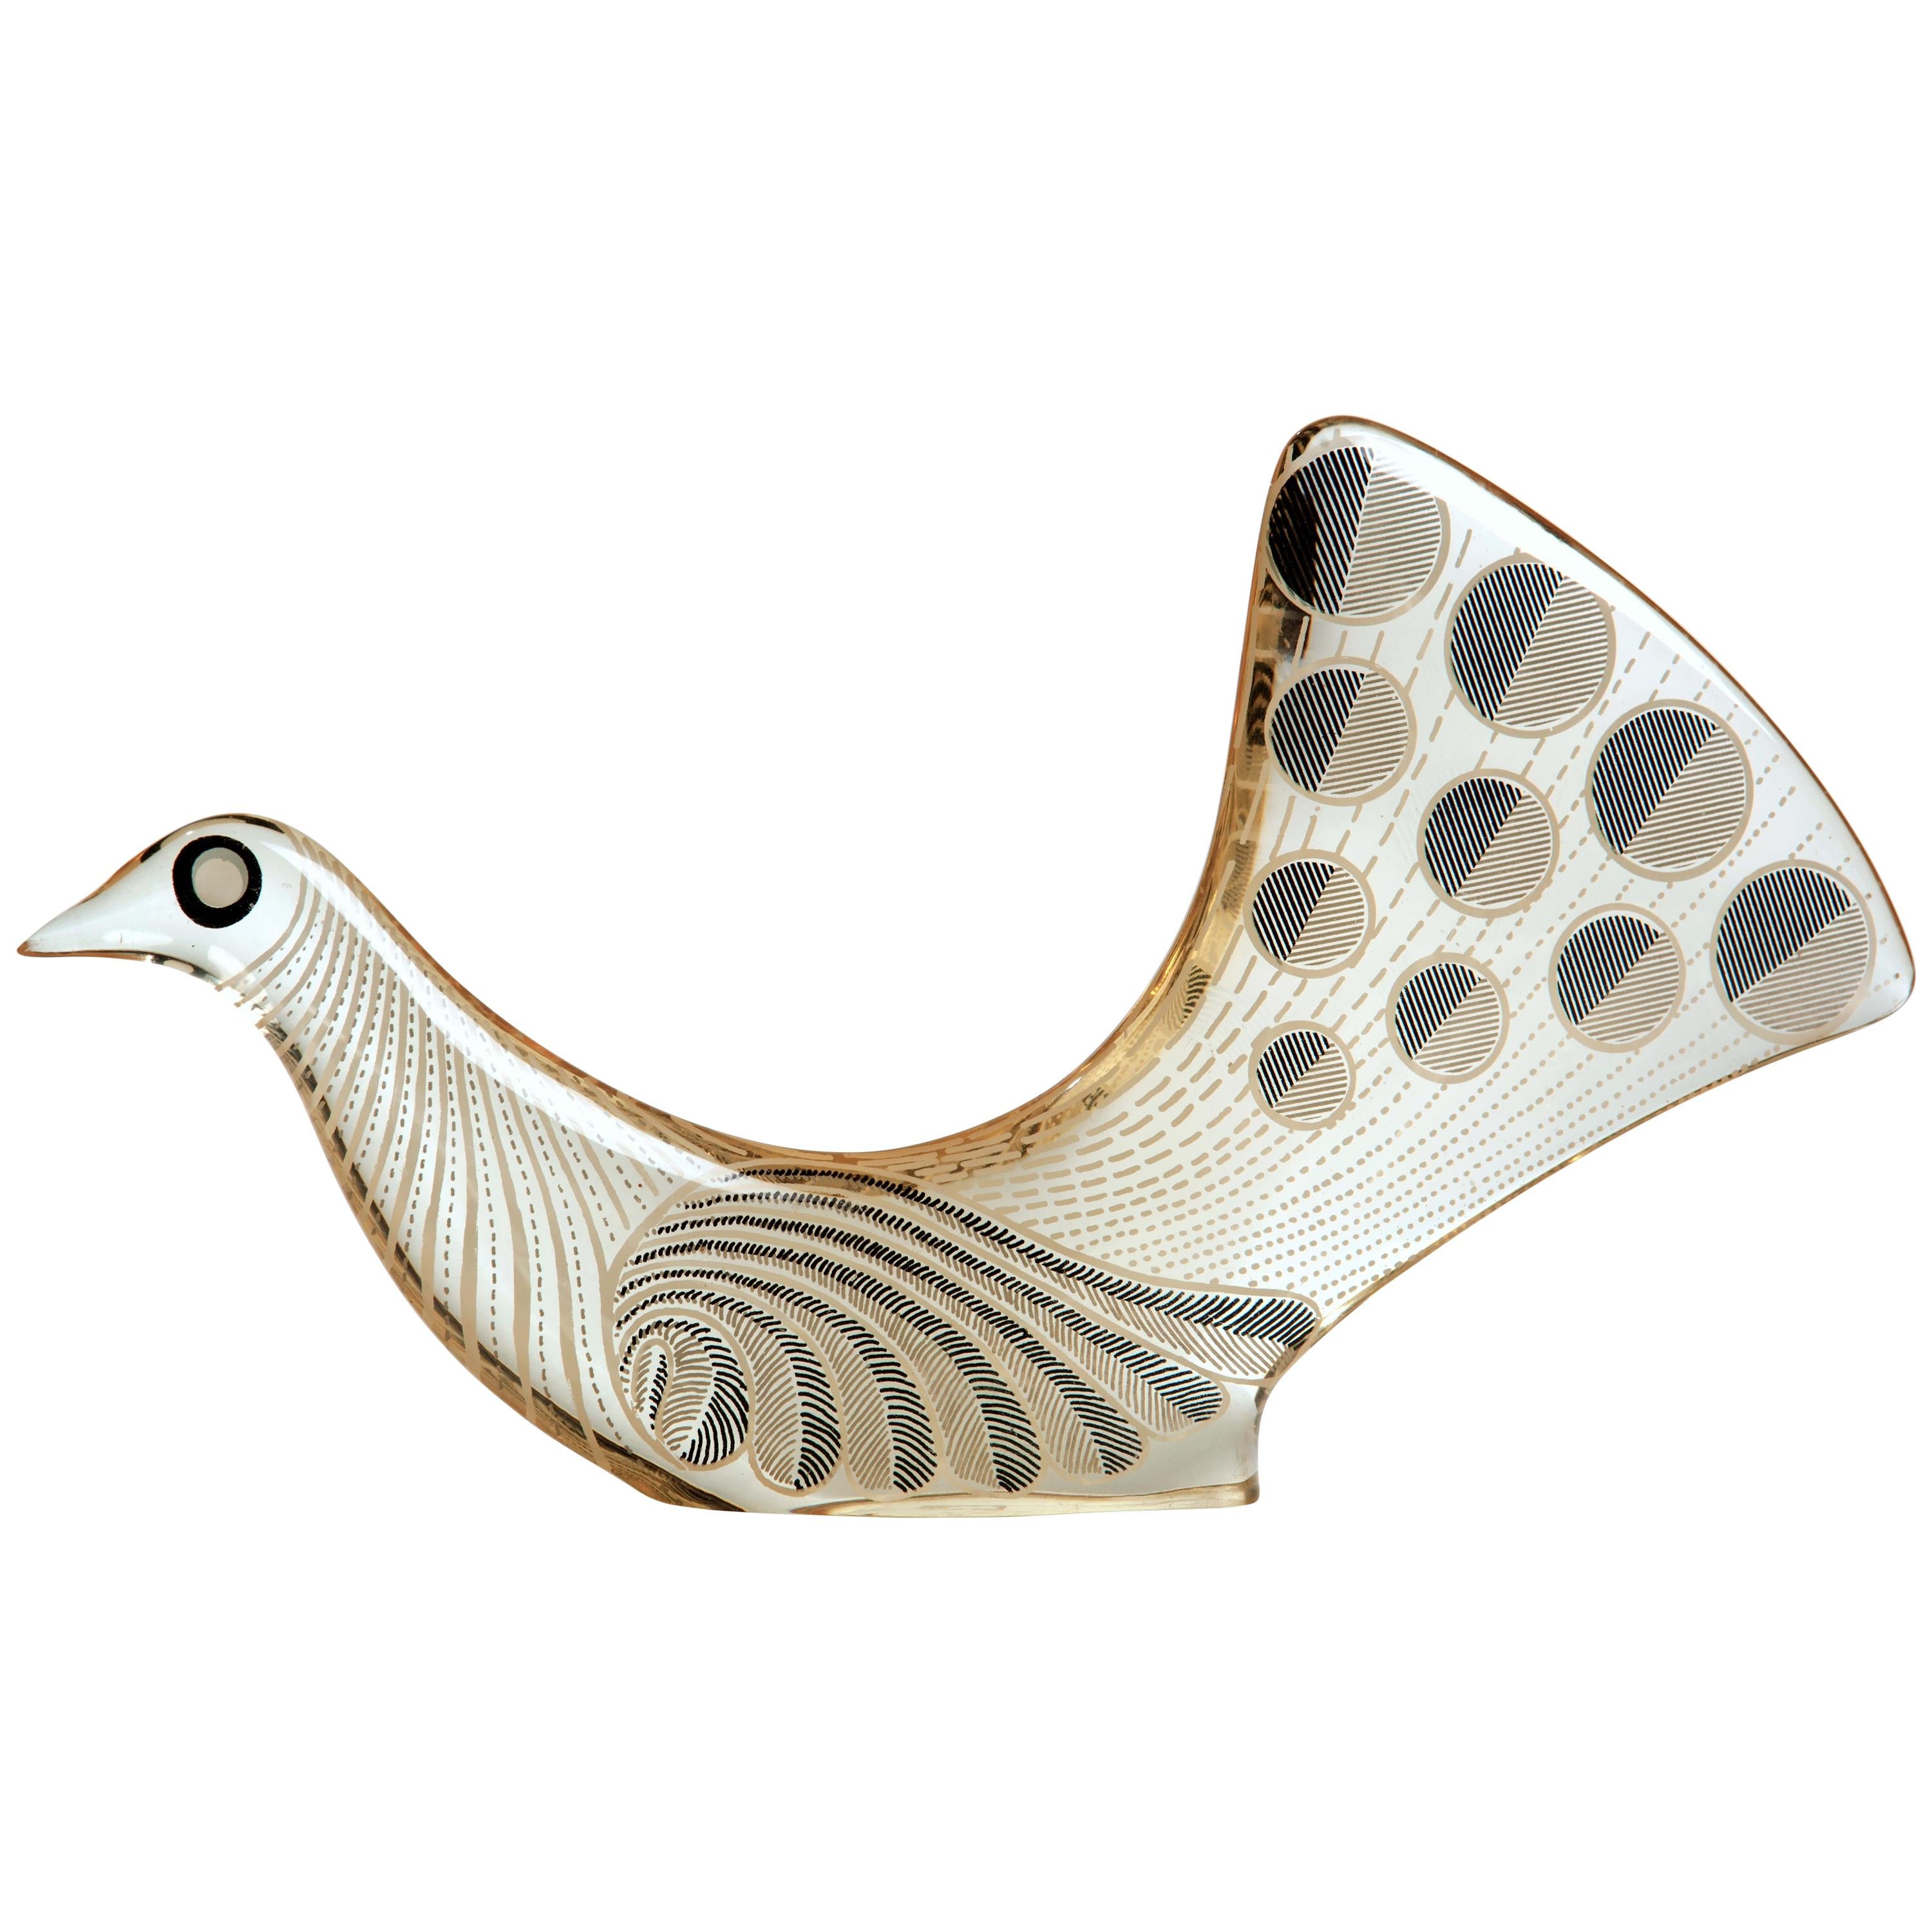 Abraham Palatnik Dove Bird Sculpture